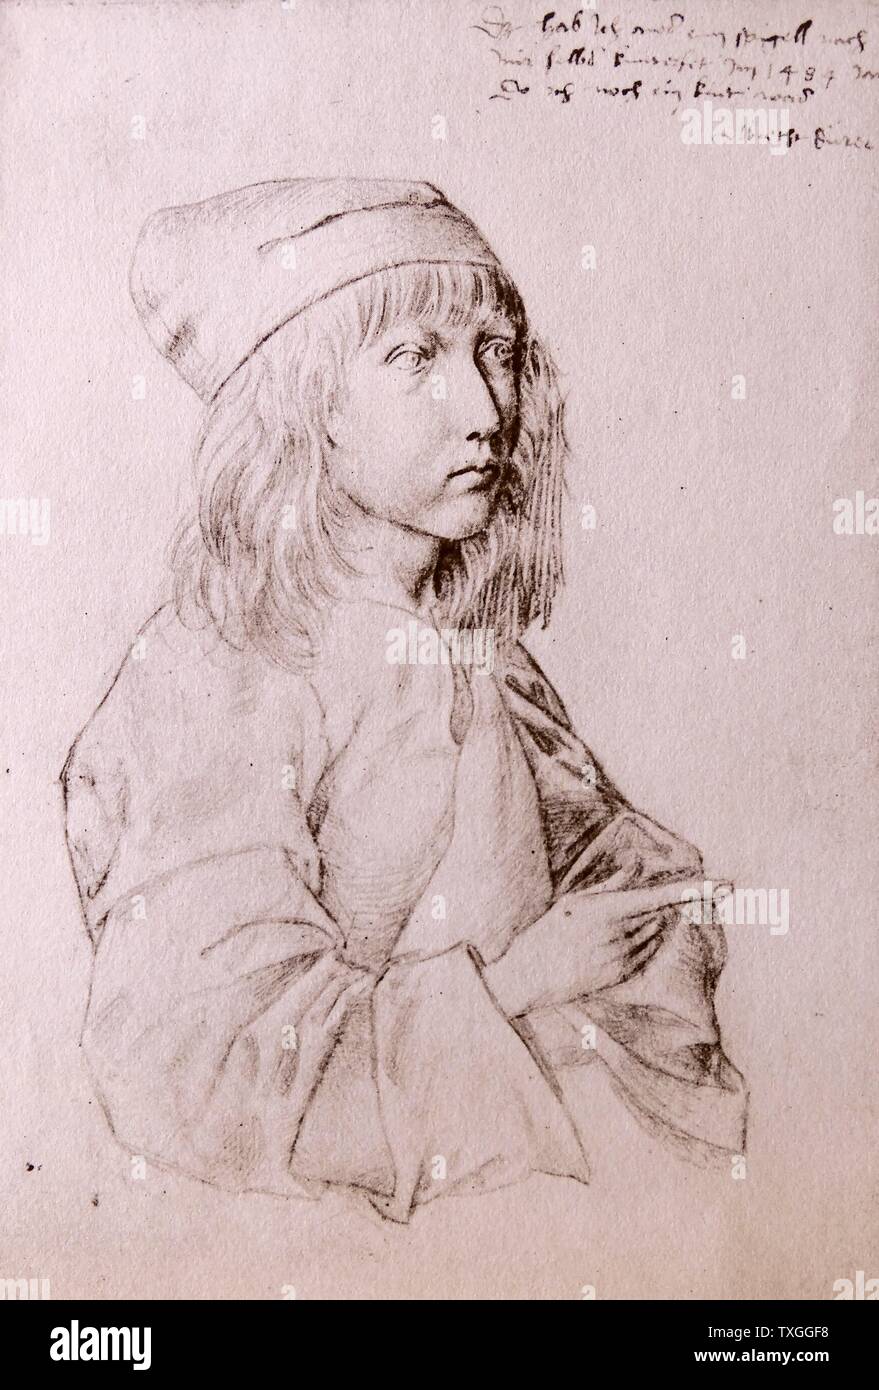 Self-portrait by Albrecht Dürer (1471-1528) painter, printmaker and theorist of the German Renaissance. Dated 16th Century Stock Photo